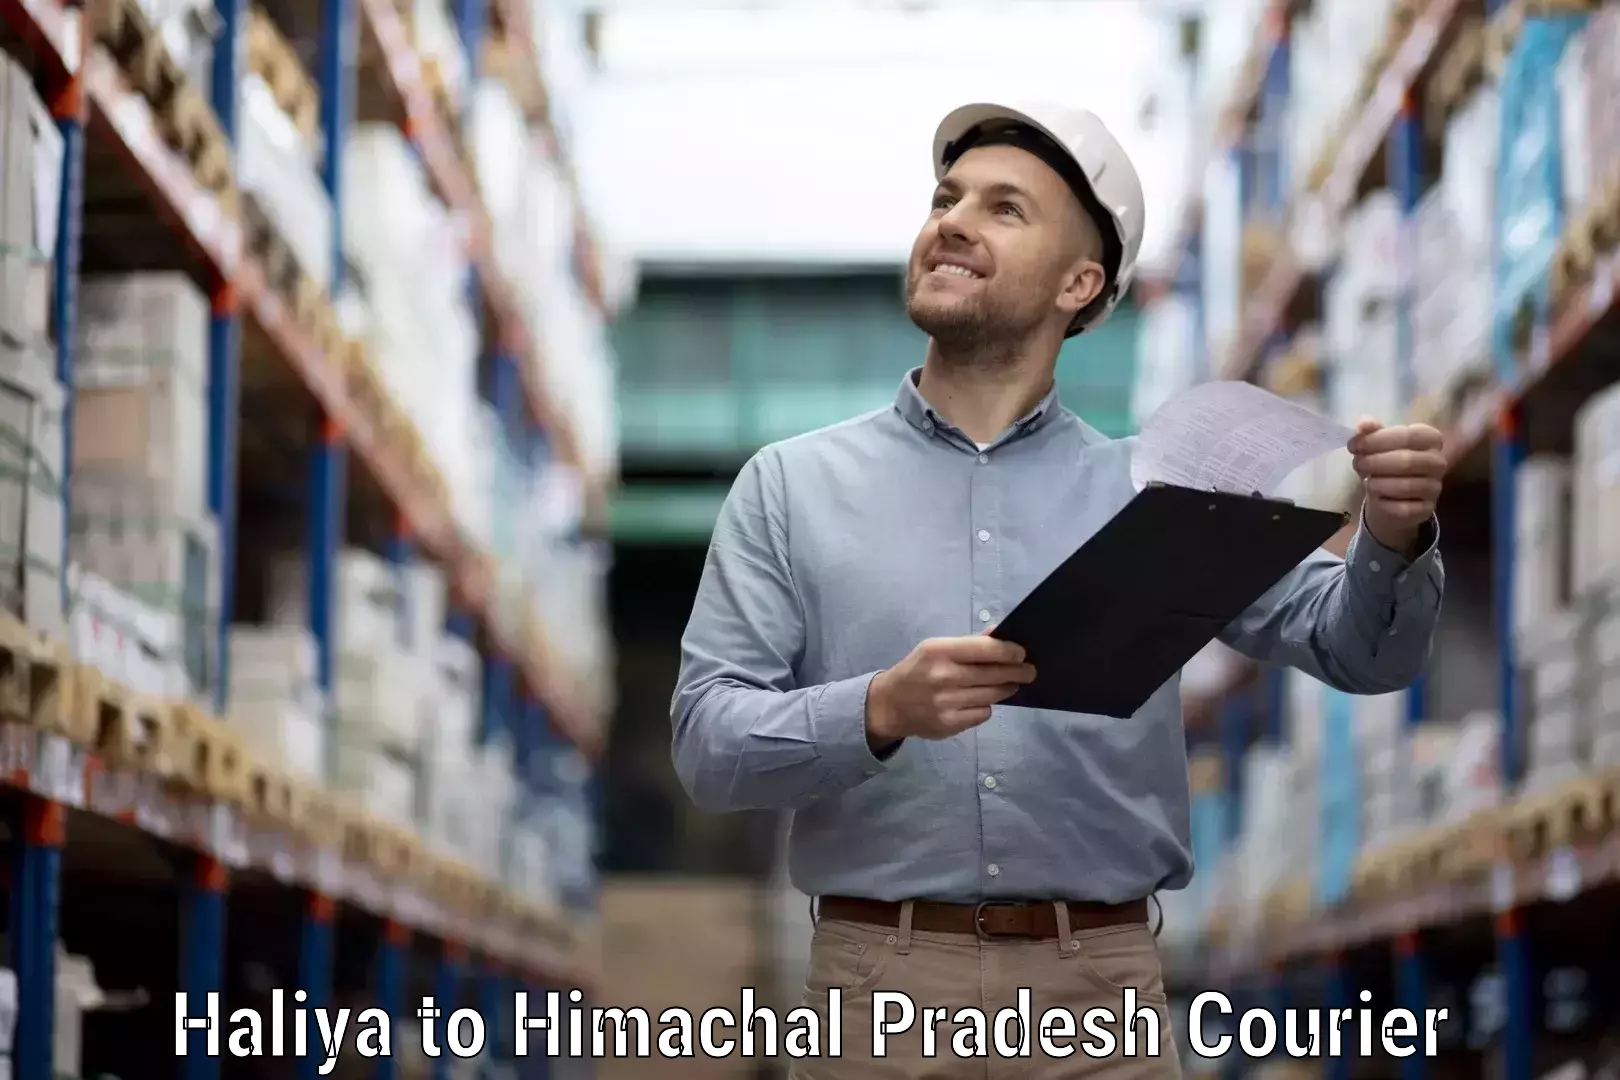 Customizable delivery plans Haliya to Himachal Pradesh